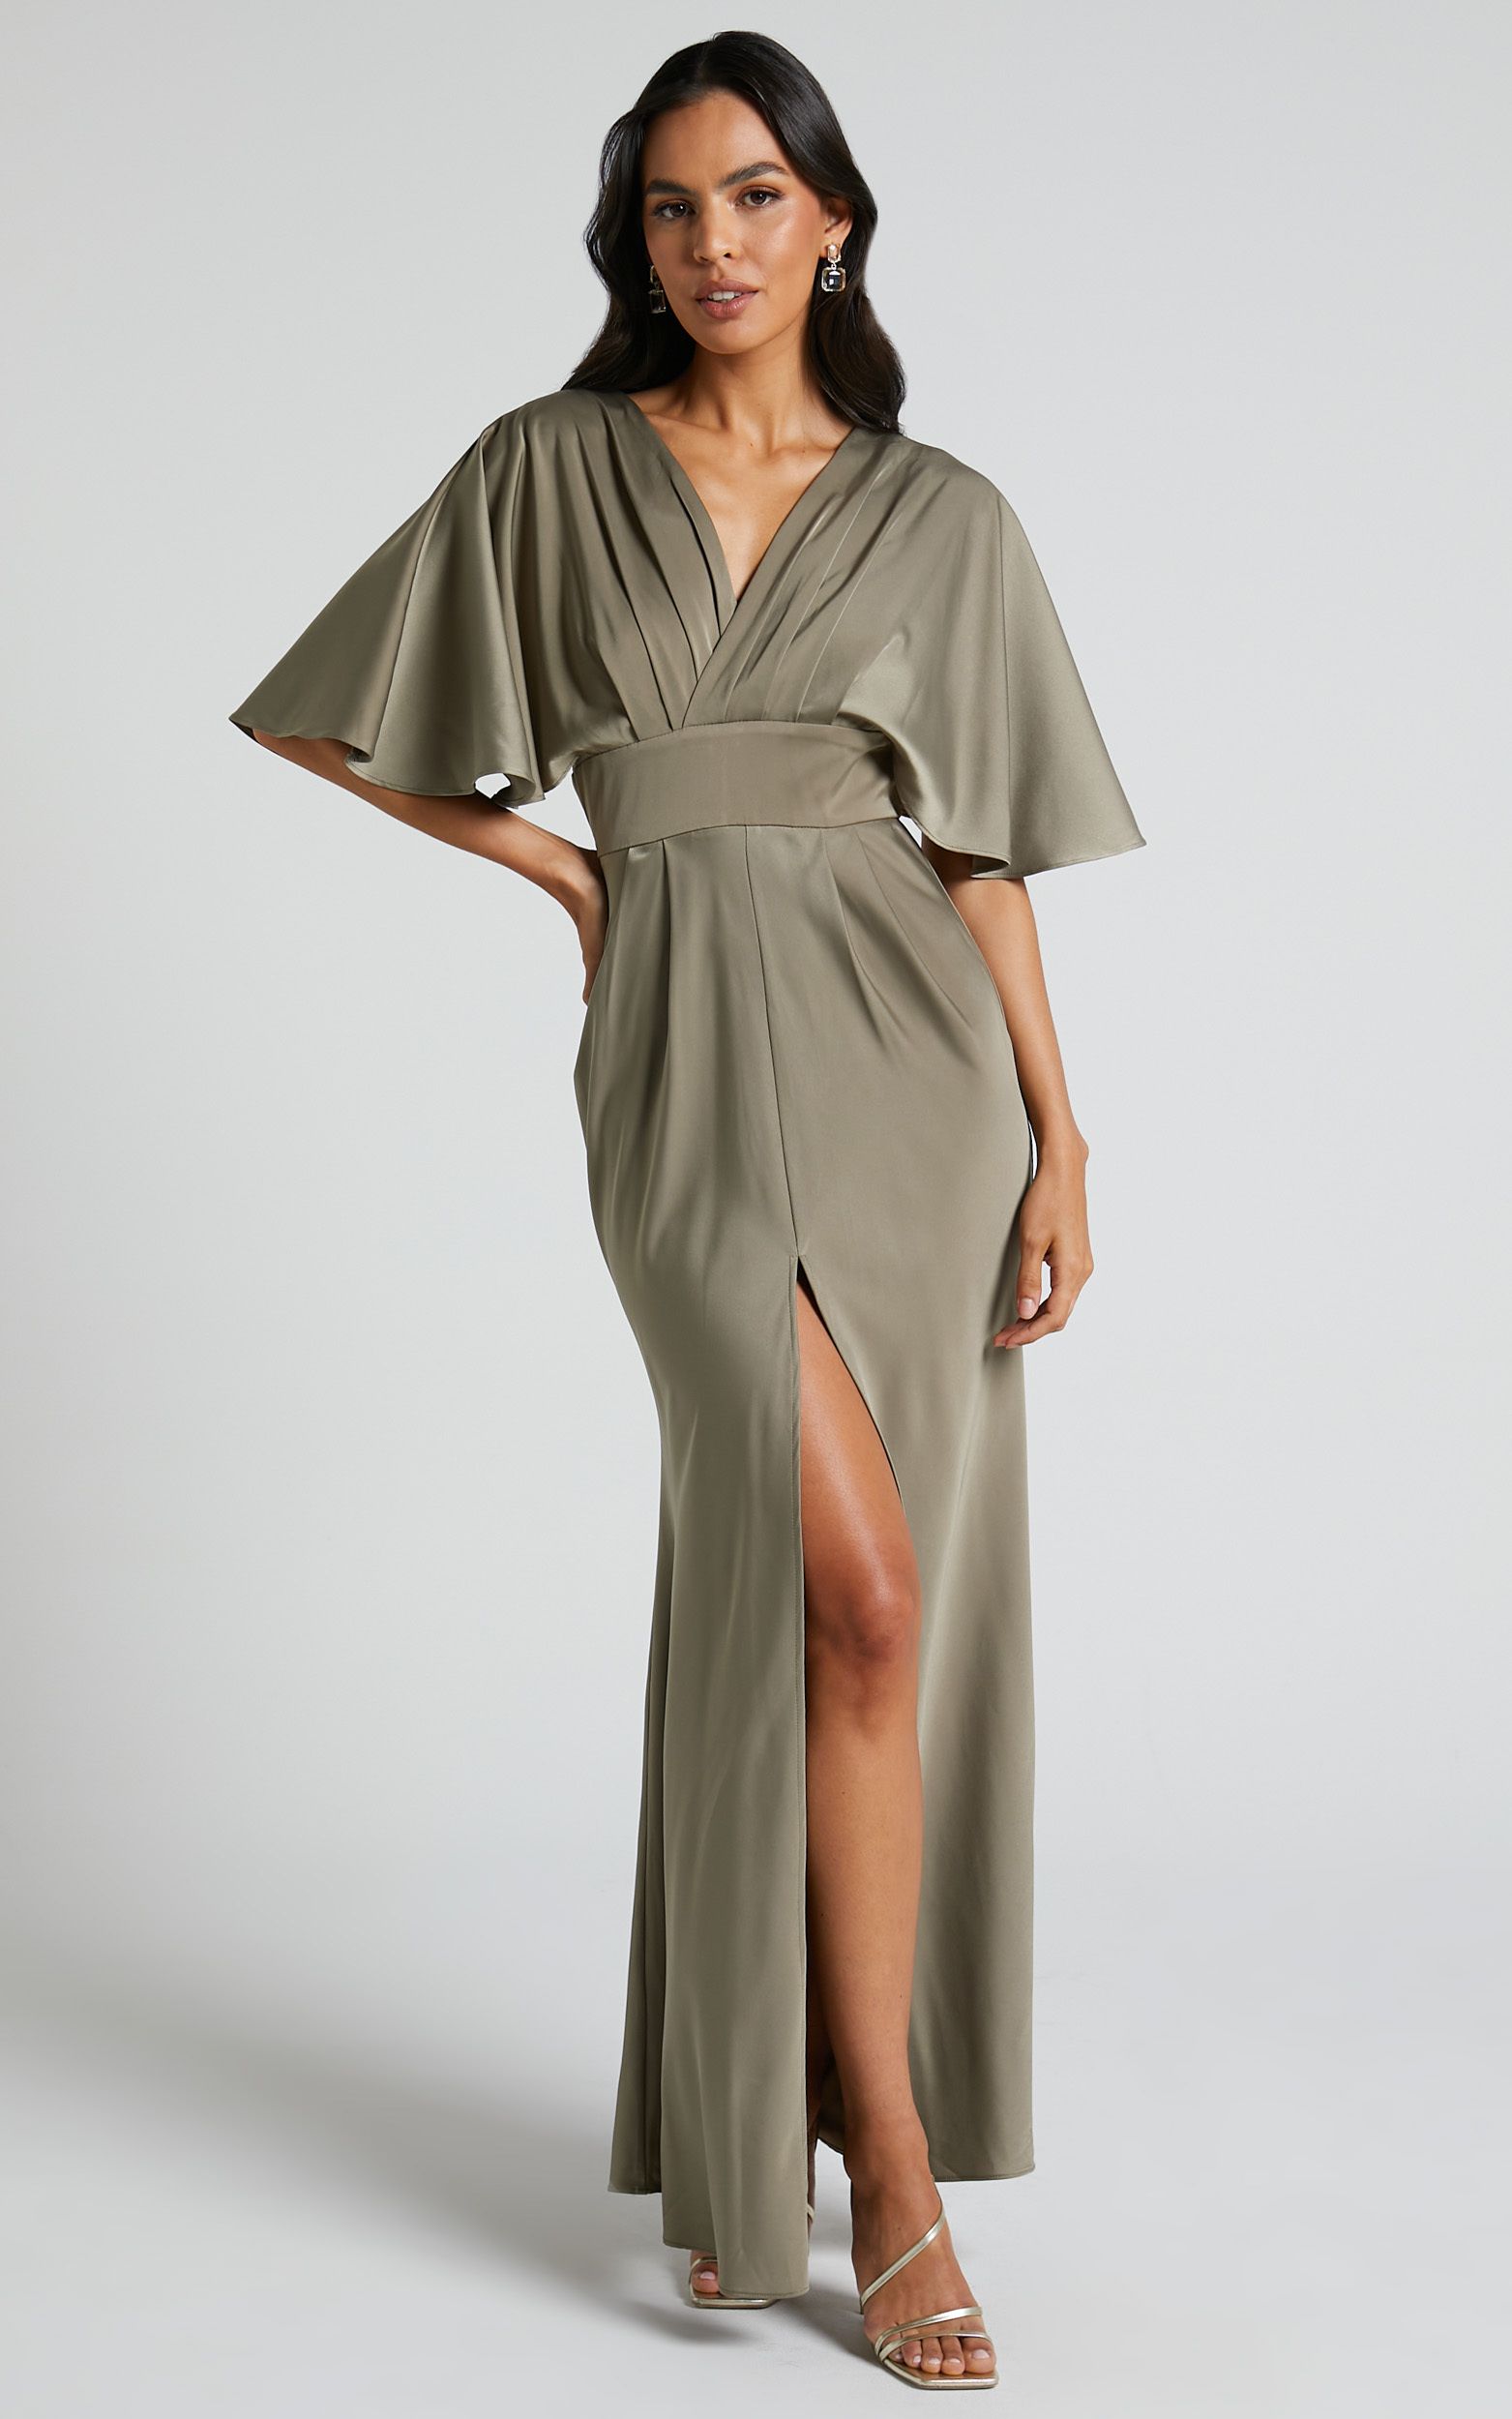 Gemalyn Maxi Dress - Angel Sleeve V Neck Split Dress in Olive | Showpo (US, UK & Europe)